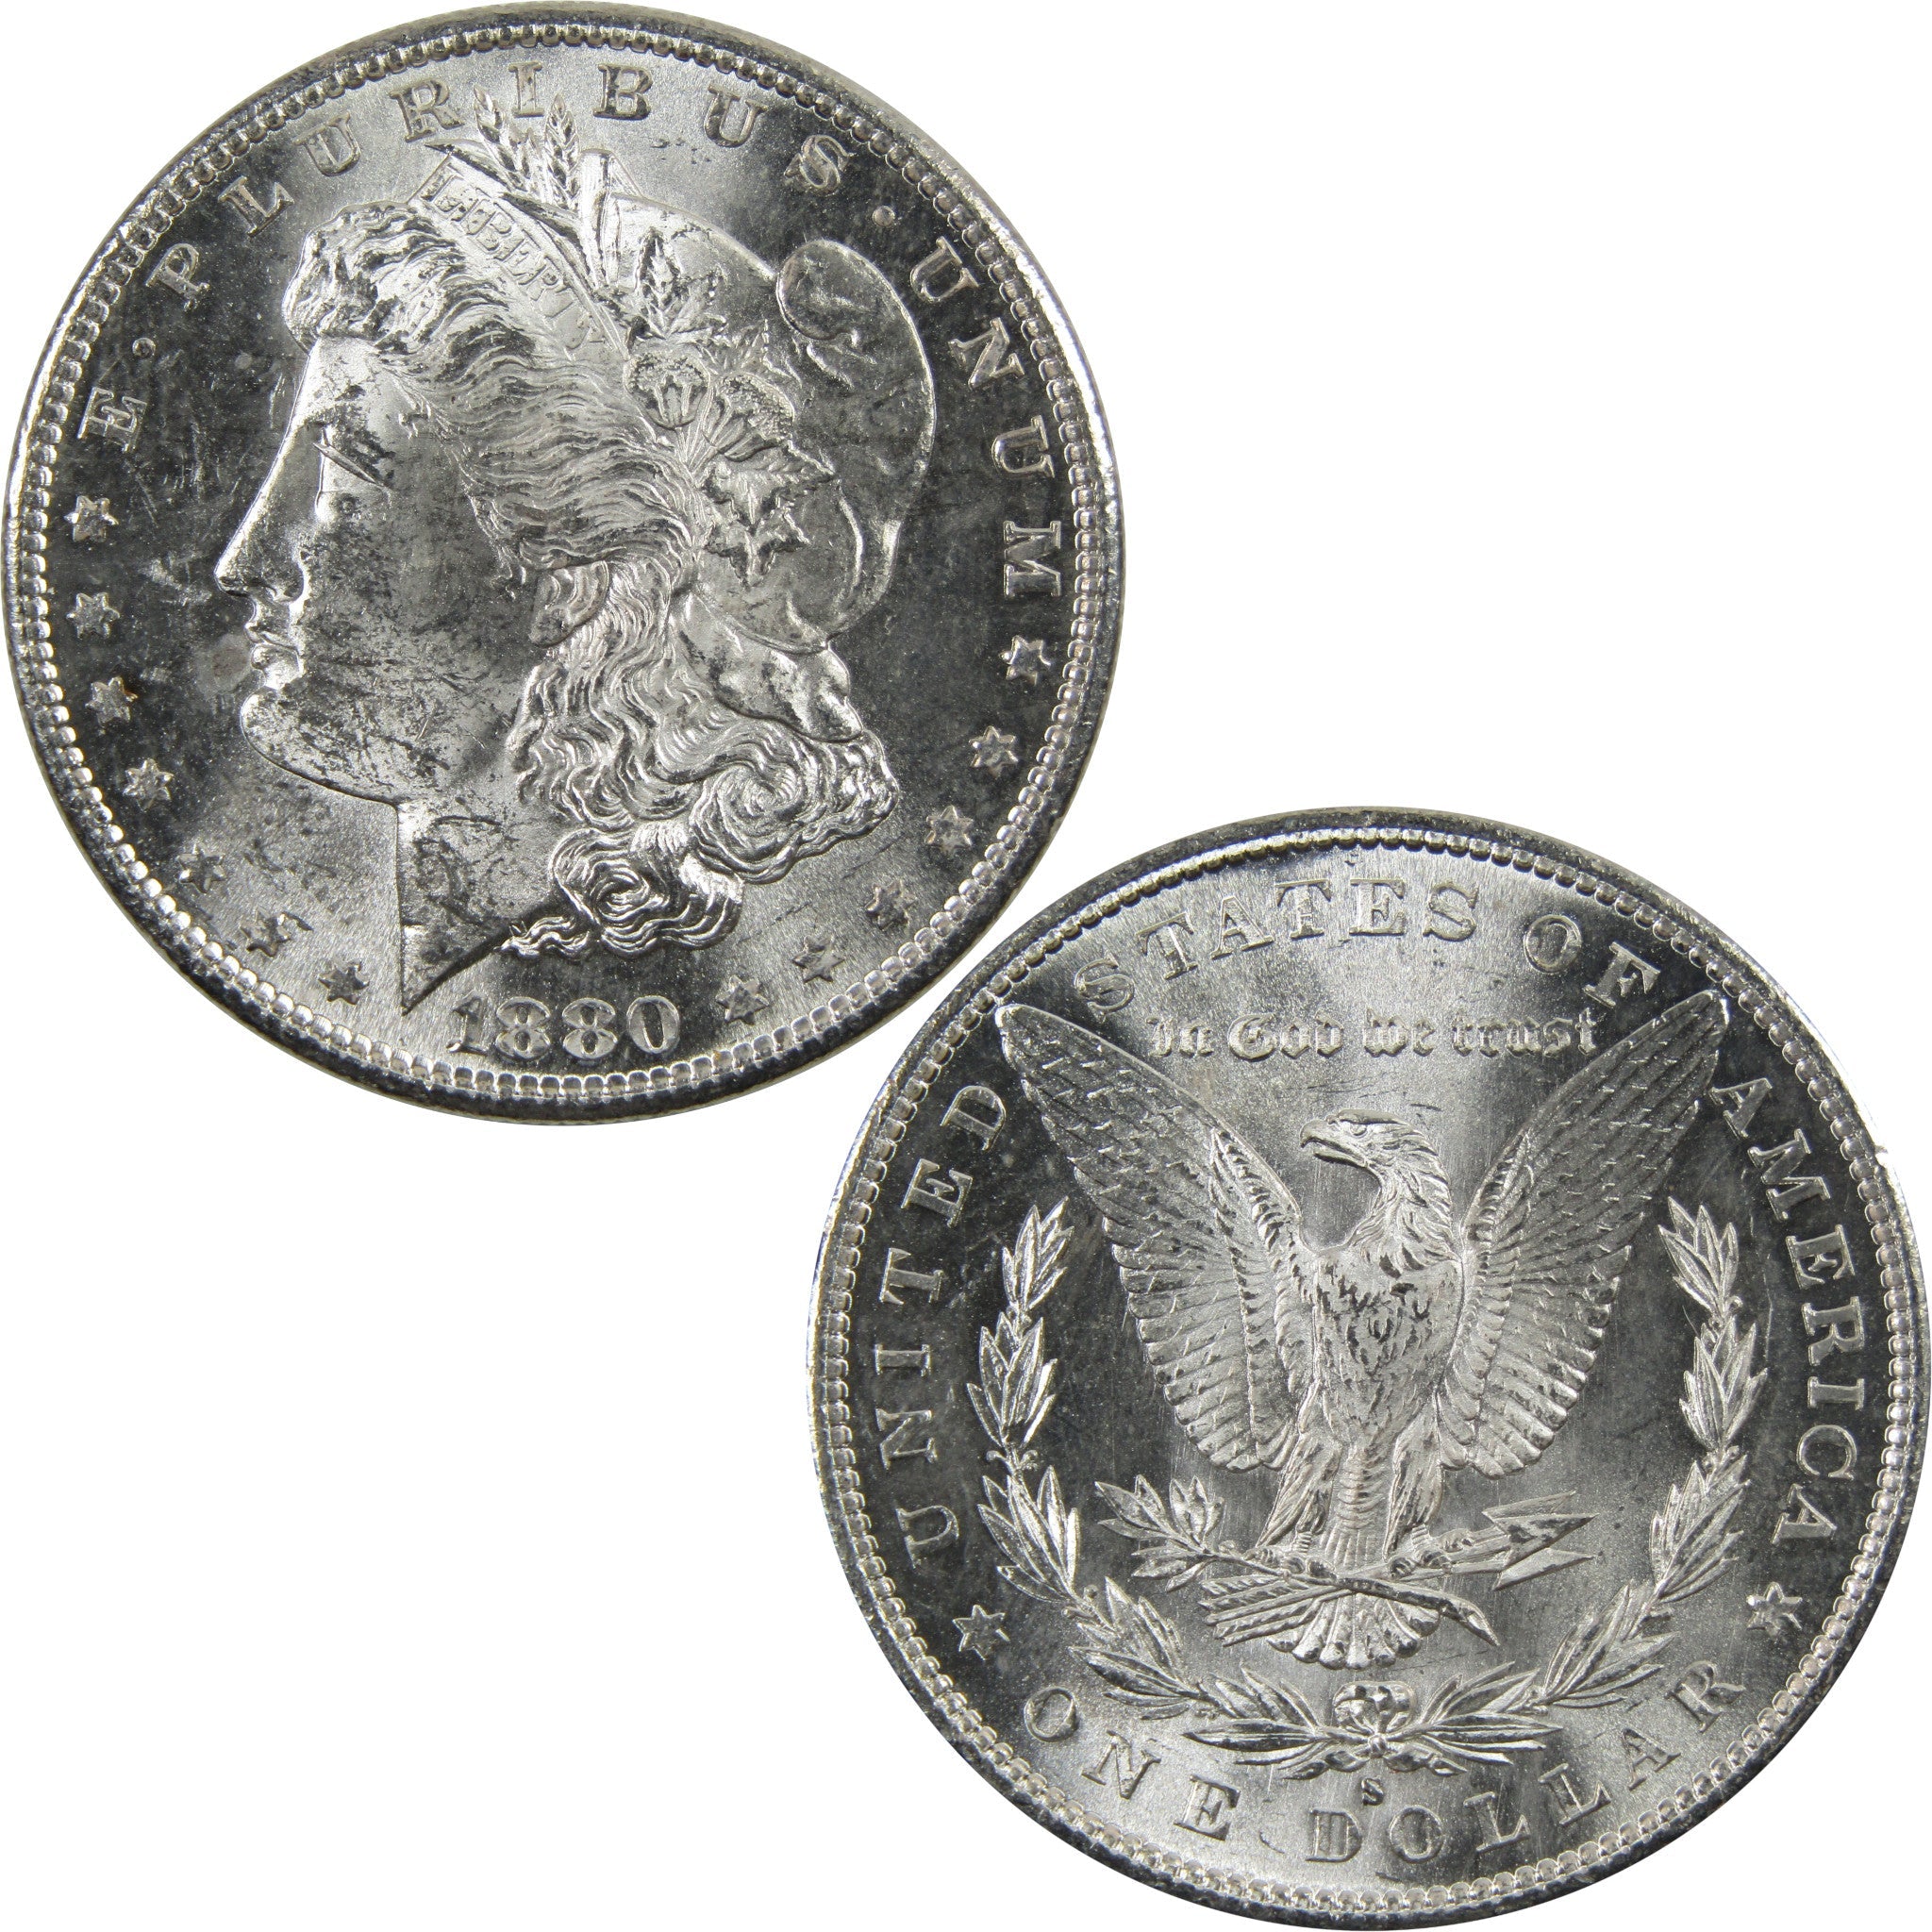 1880 S Morgan Dollar BU Uncirculated 90% Silver $1 Coin SKU:I5440 - Morgan coin - Morgan silver dollar - Morgan silver dollar for sale - Profile Coins &amp; Collectibles